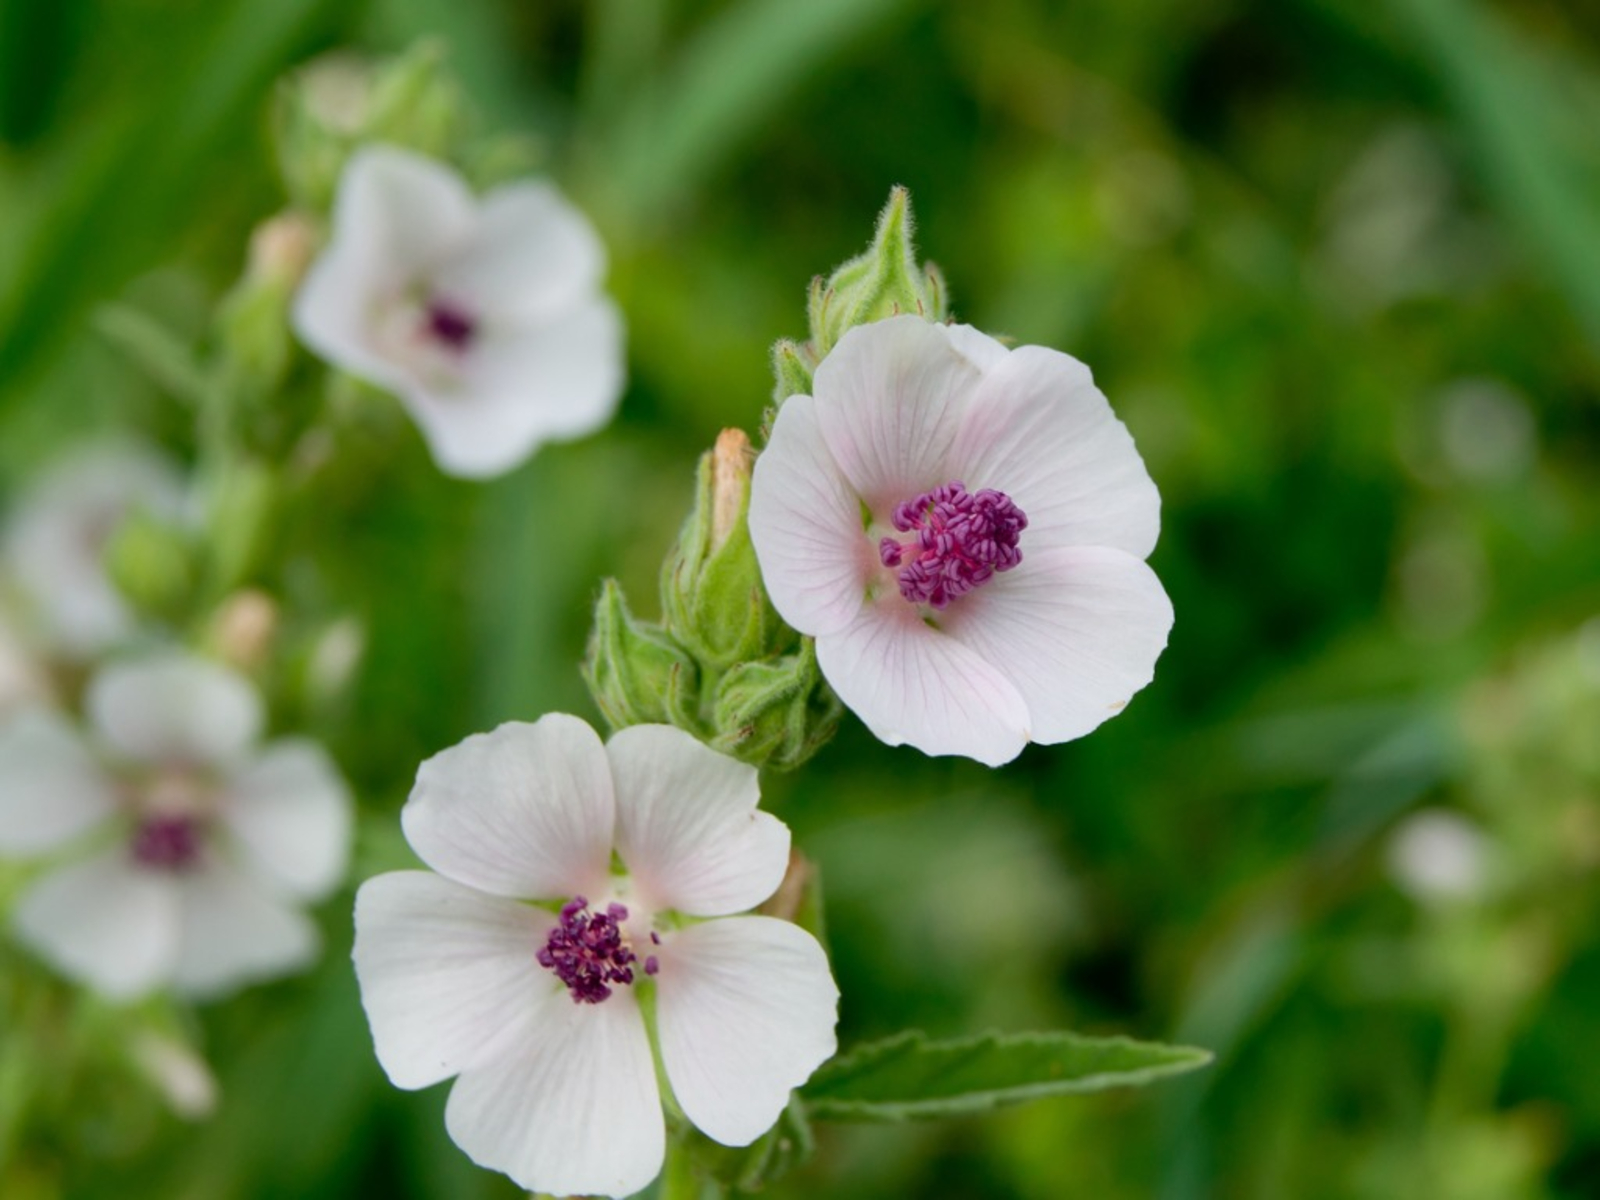 National flower of Armenia - Marshmallow plant